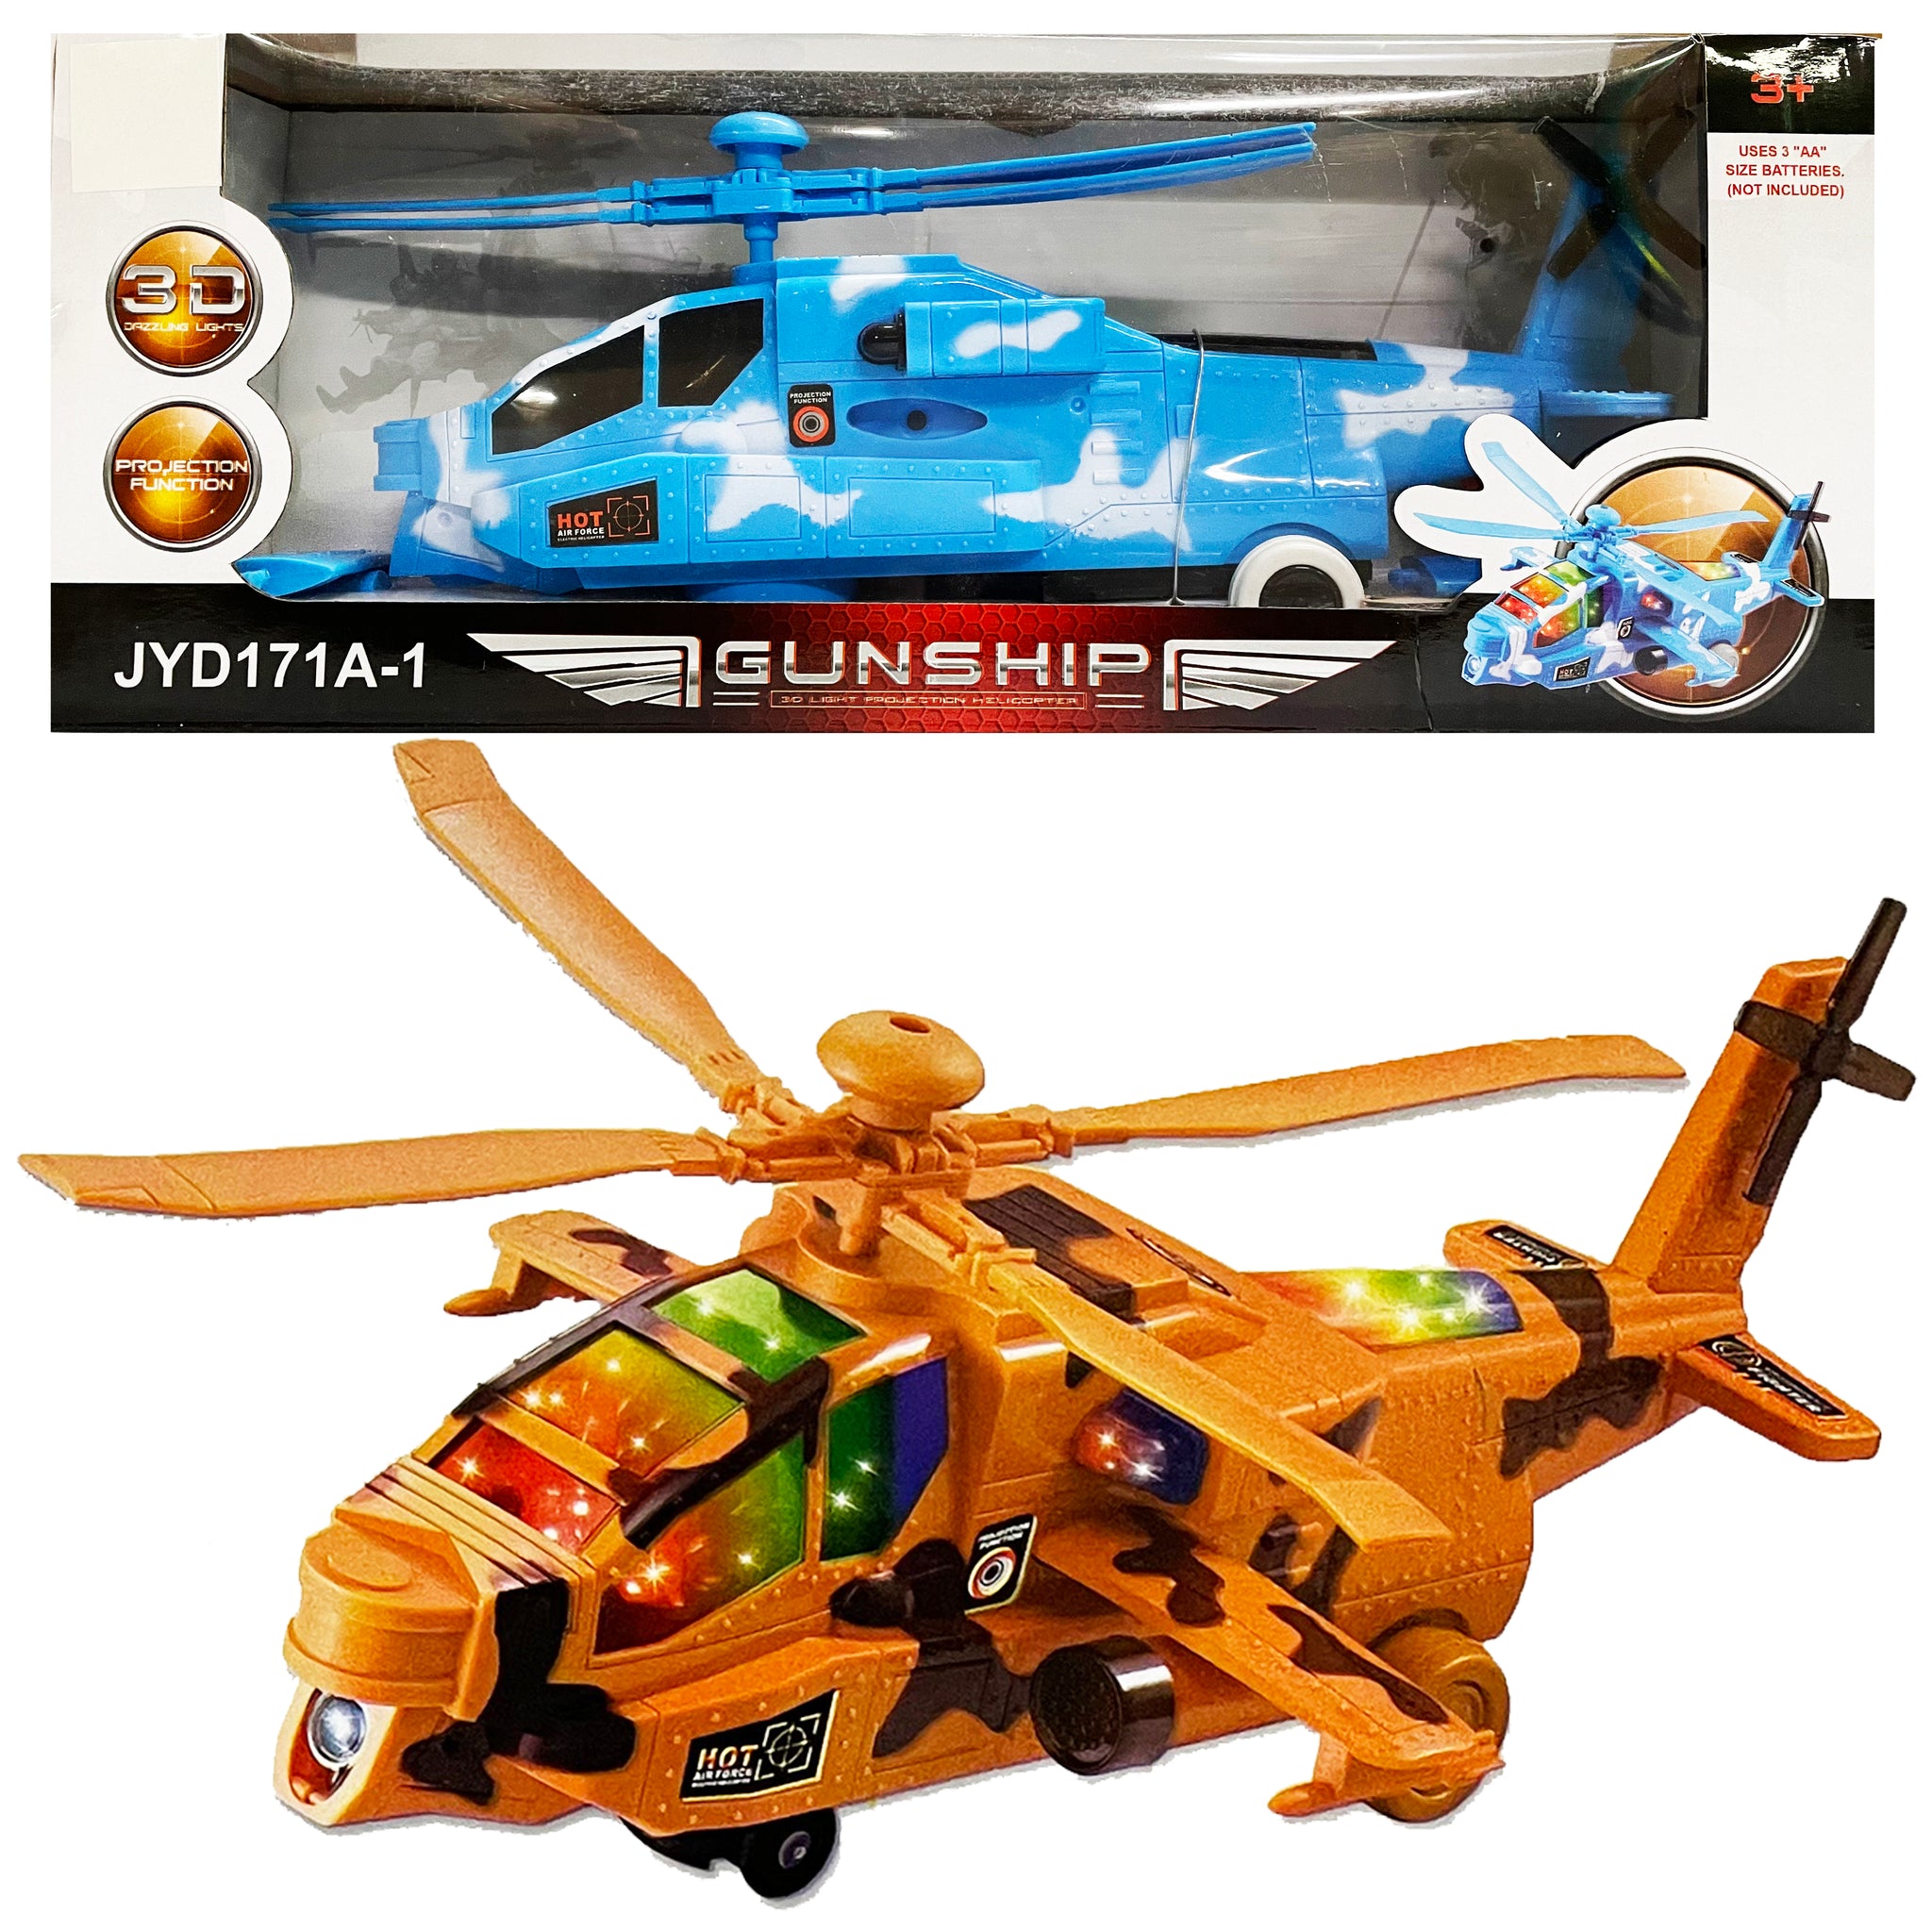 Led Light Up Gunship Helicopter Toy